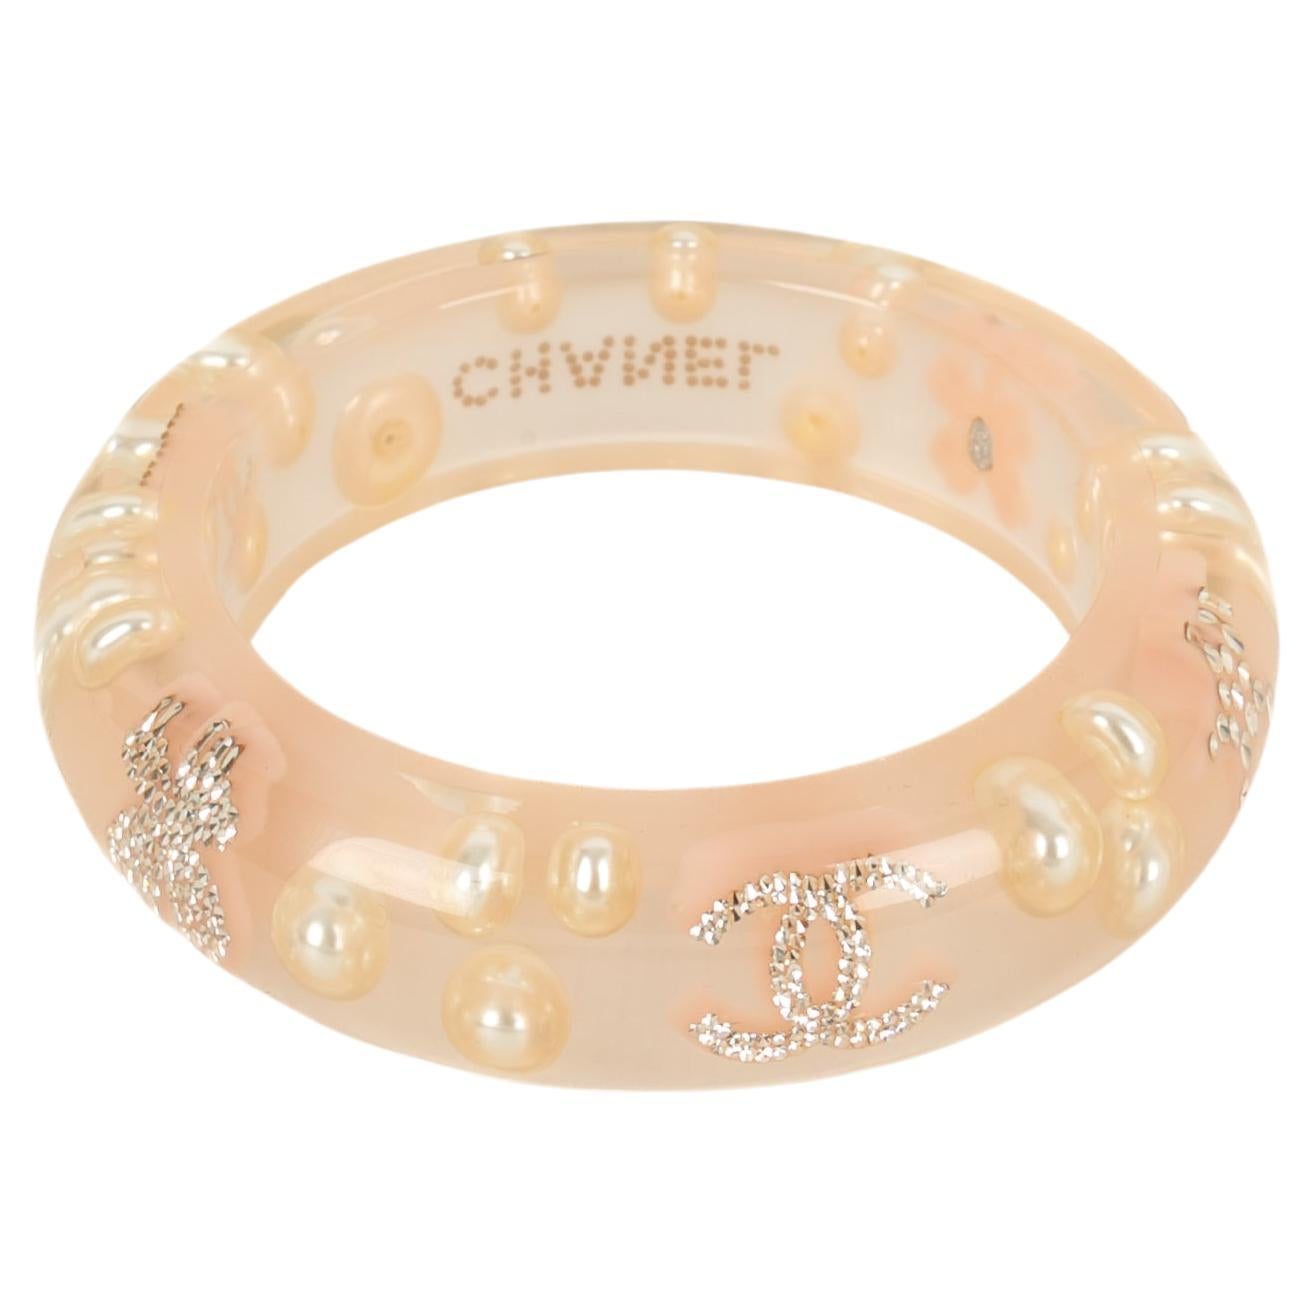 Chanel bracelet Spring 2005